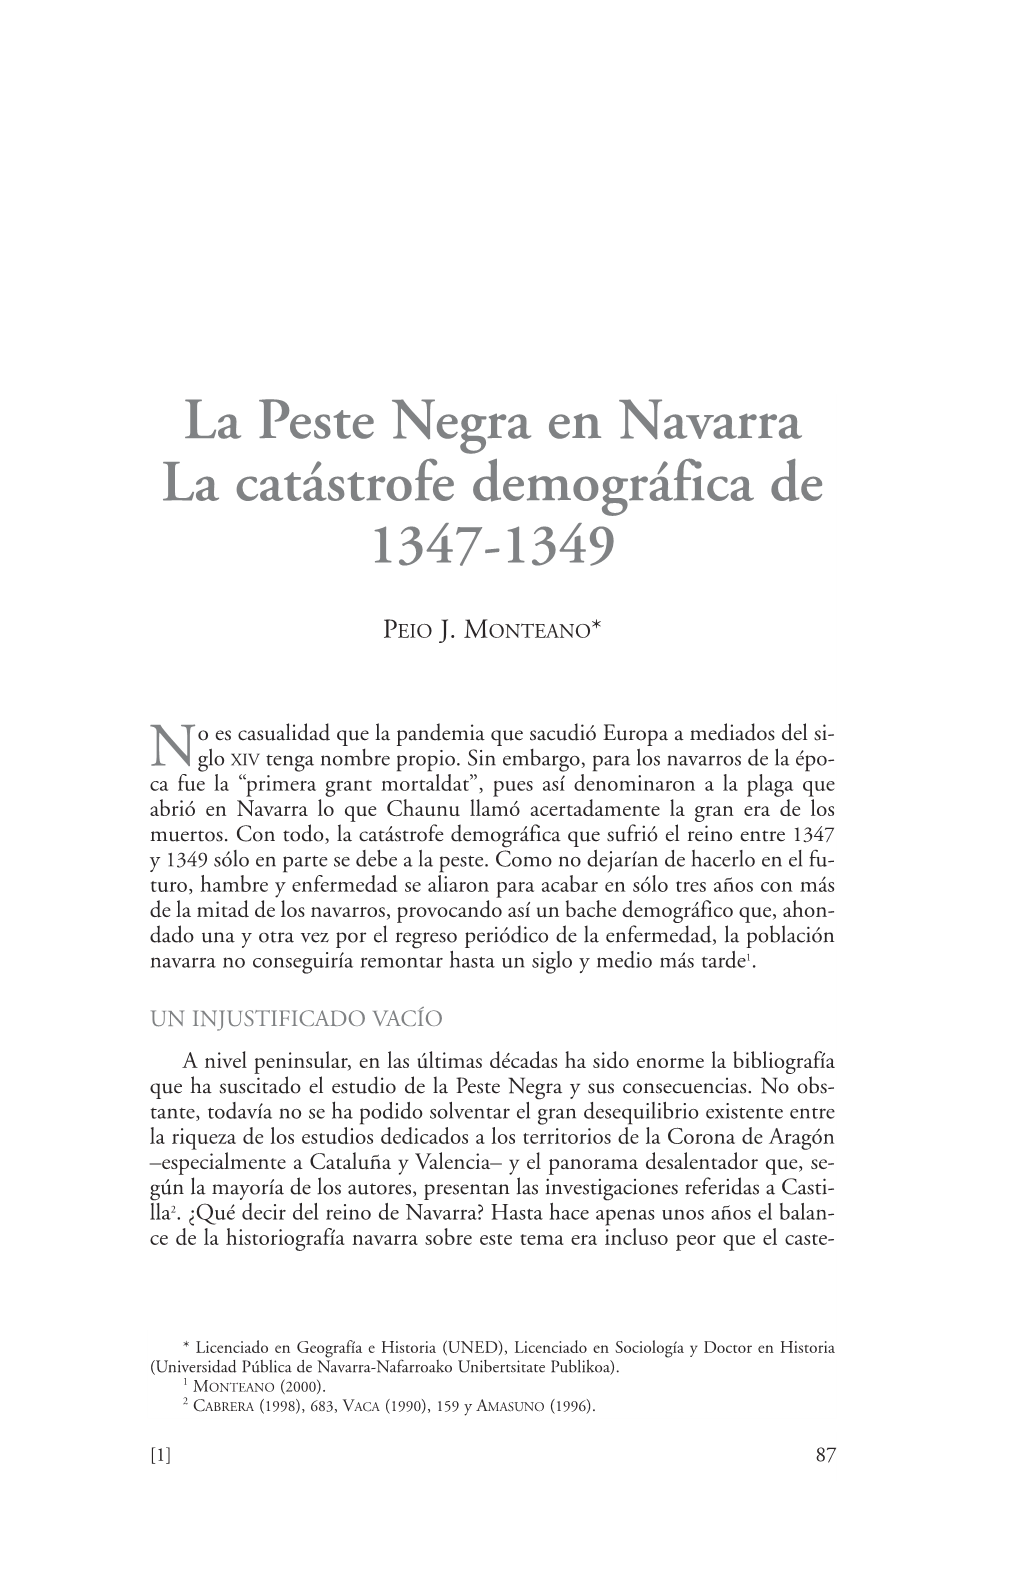 La Peste Negra En Navarra. La Catástrofe Demográfica De